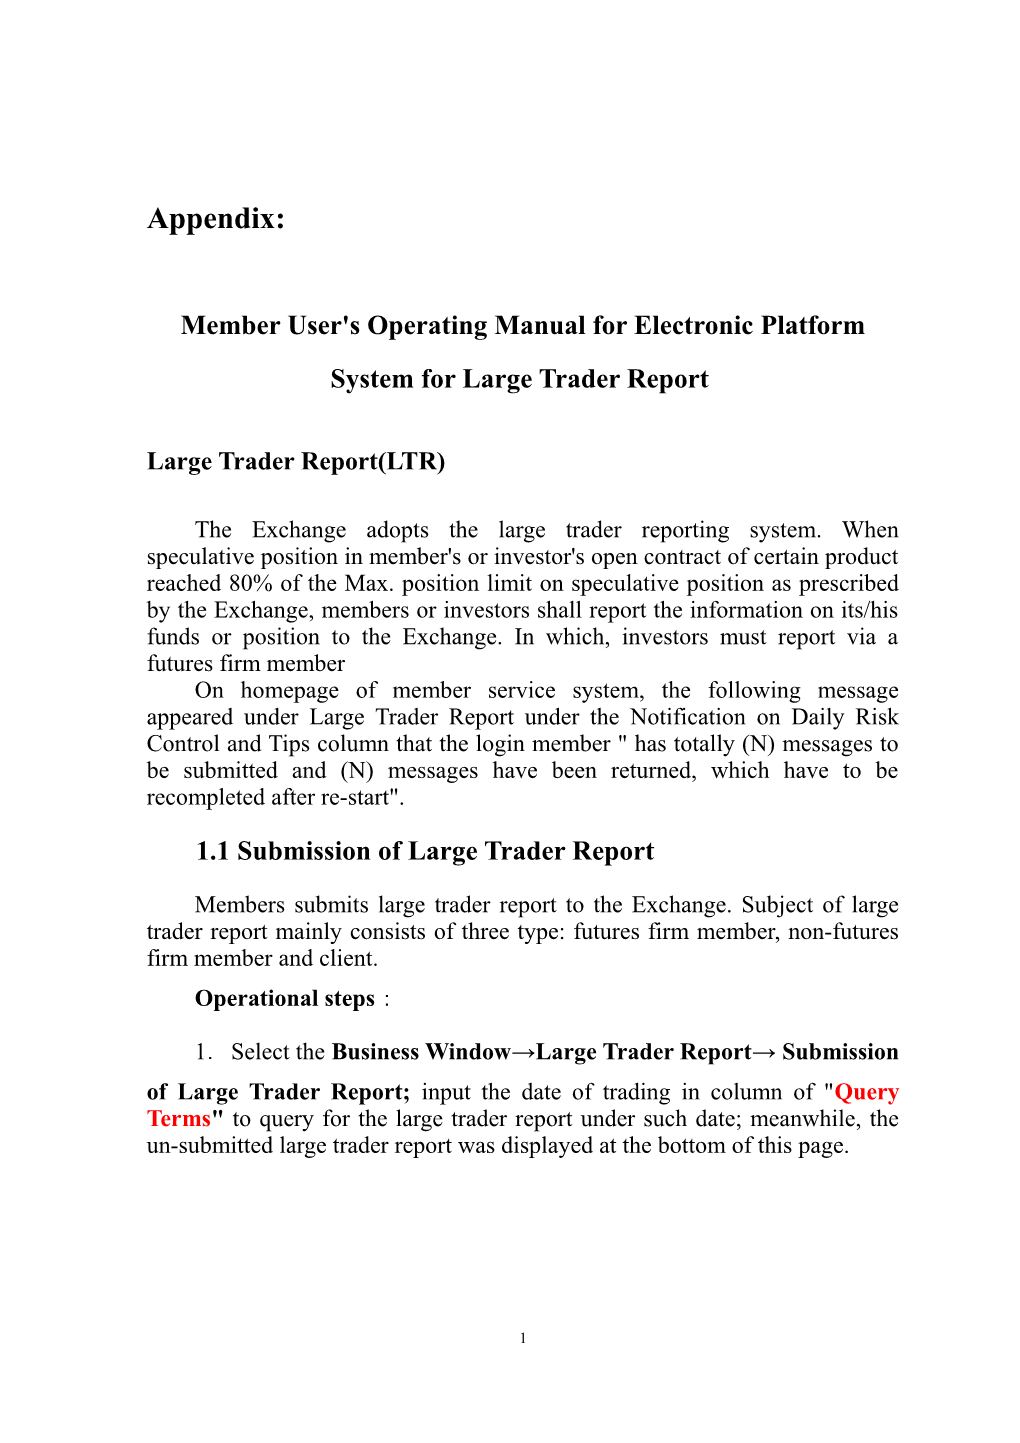 Member User's Operating Manual for Electronic Platform System for Large Trader Report